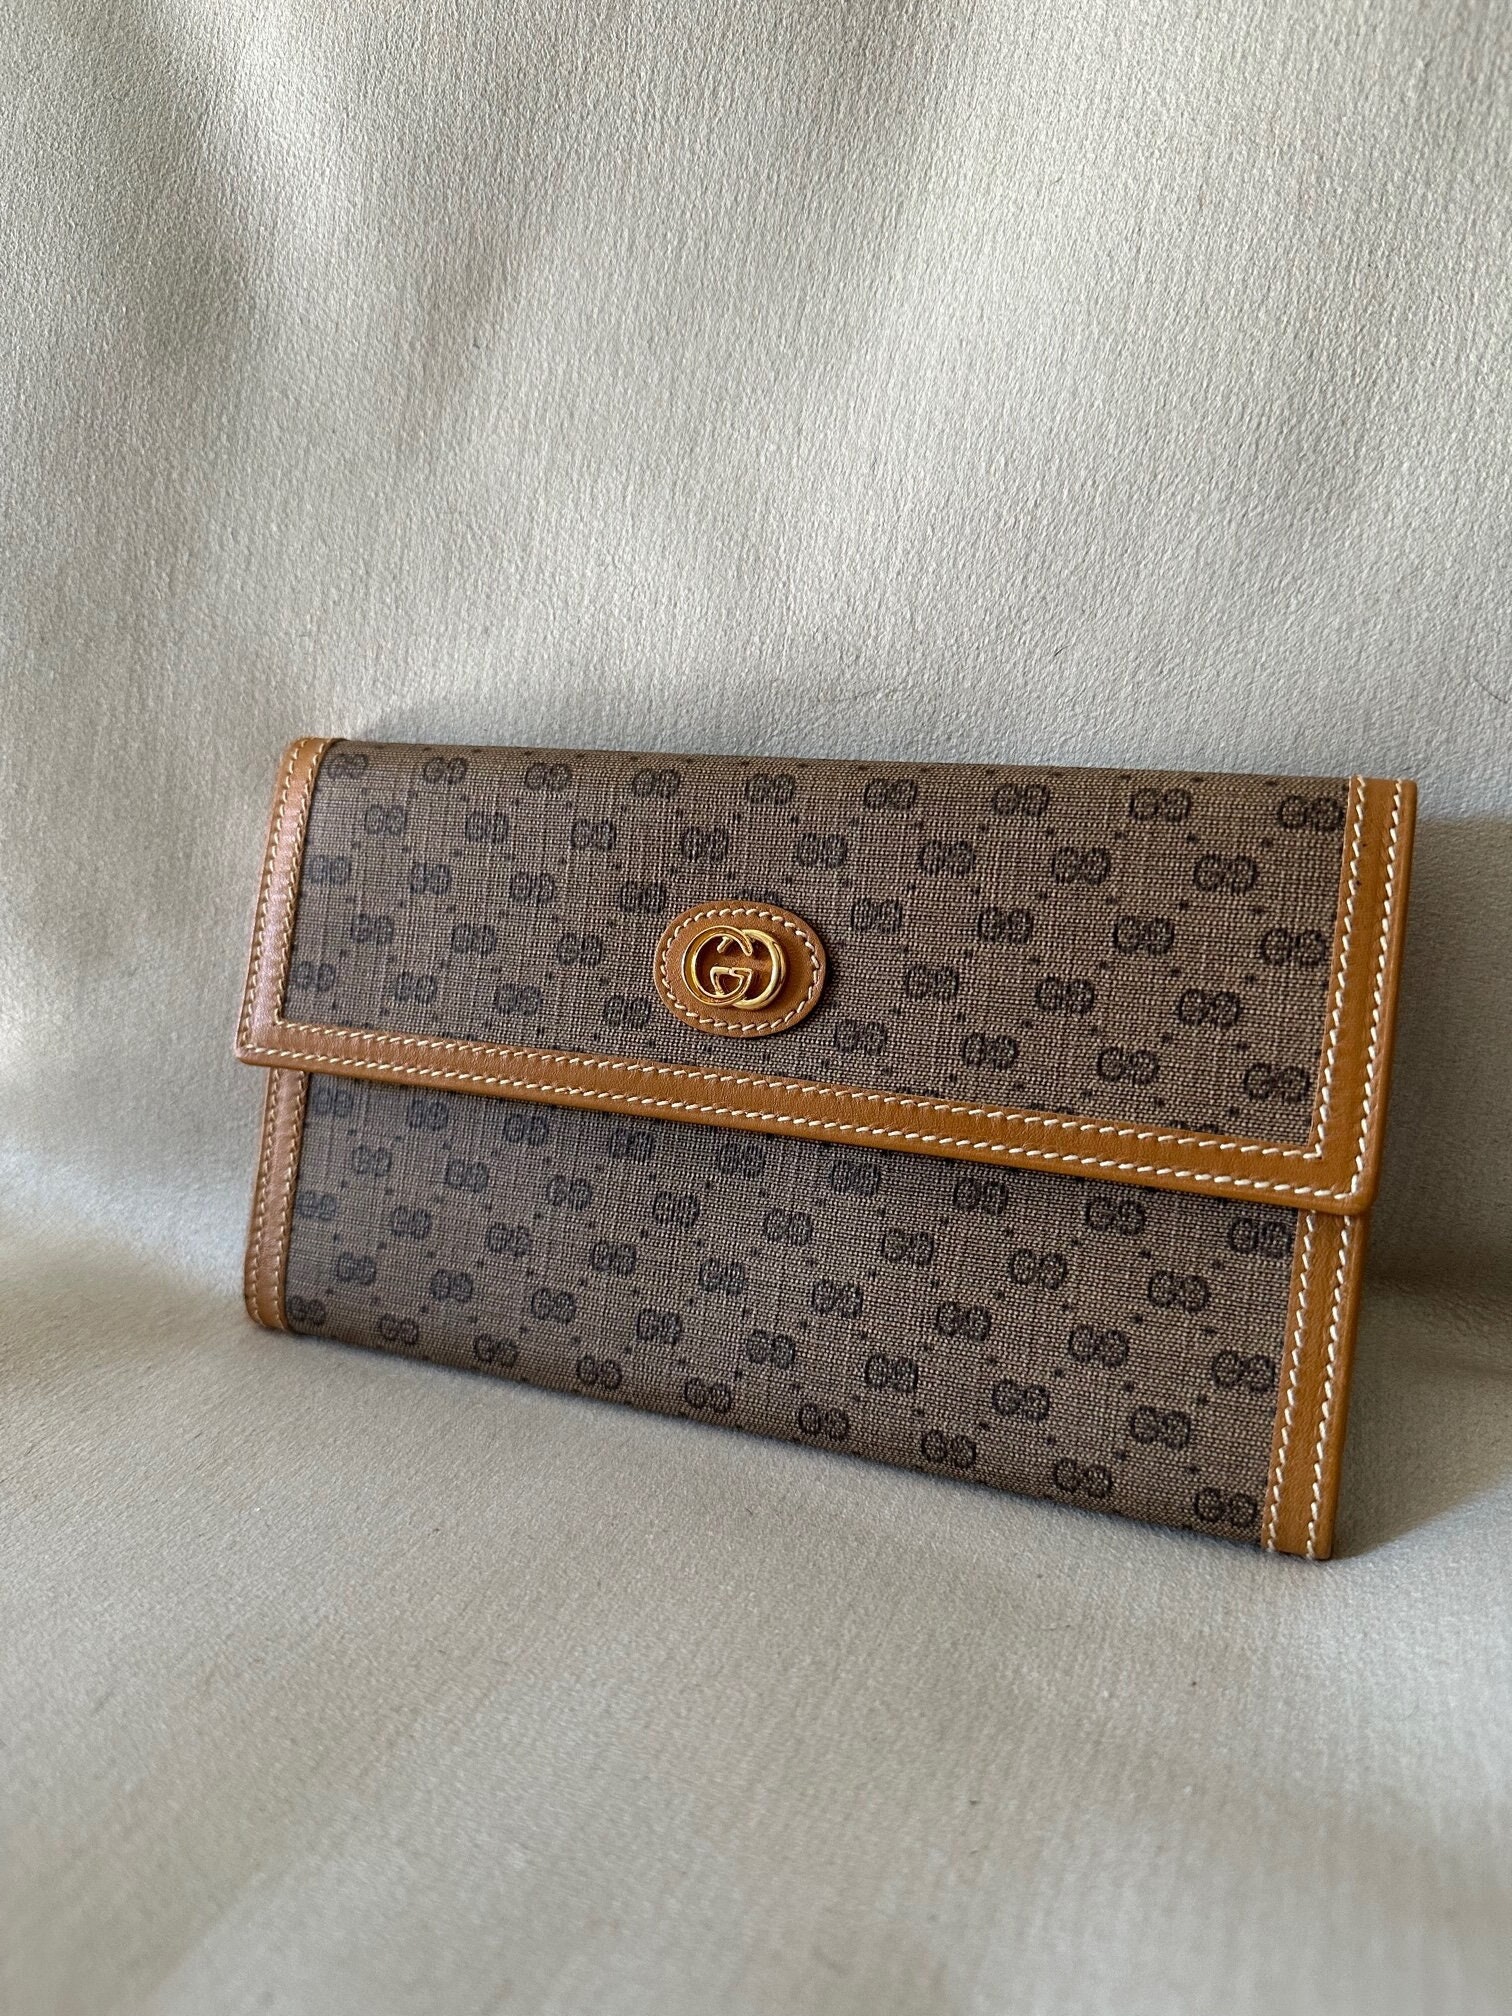 Vintage Louis Vuitton Gift Box Envelope & Insert 4x5 Card Holder Wallet